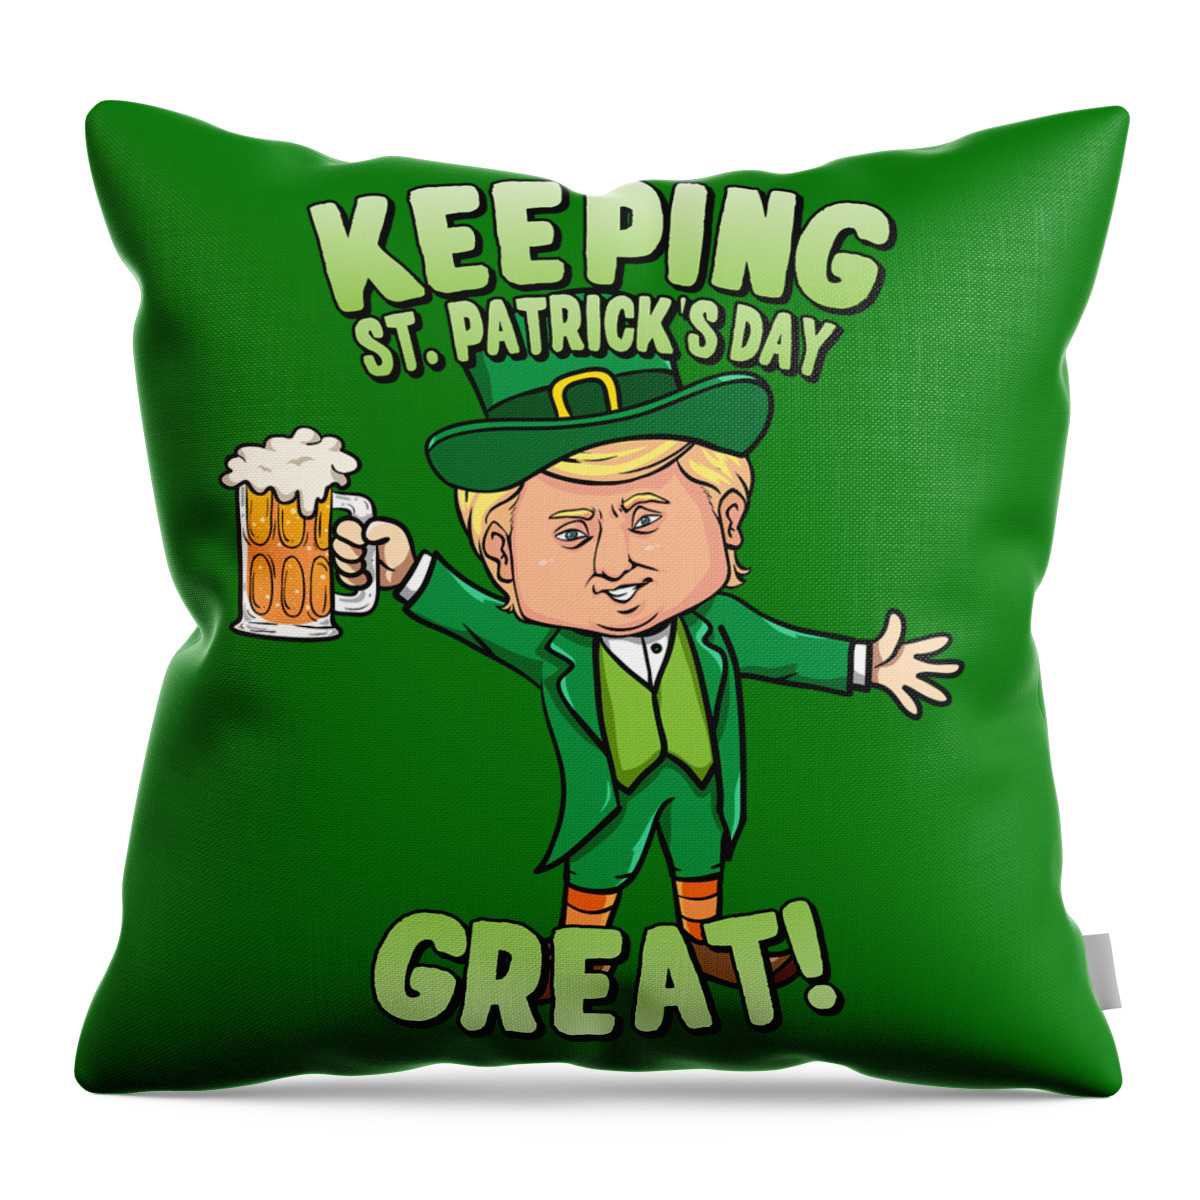 Cool Throw Pillow featuring the digital art Donald Trump Keeping St Patricks Day Great Leprechaun by Flippin Sweet Gear